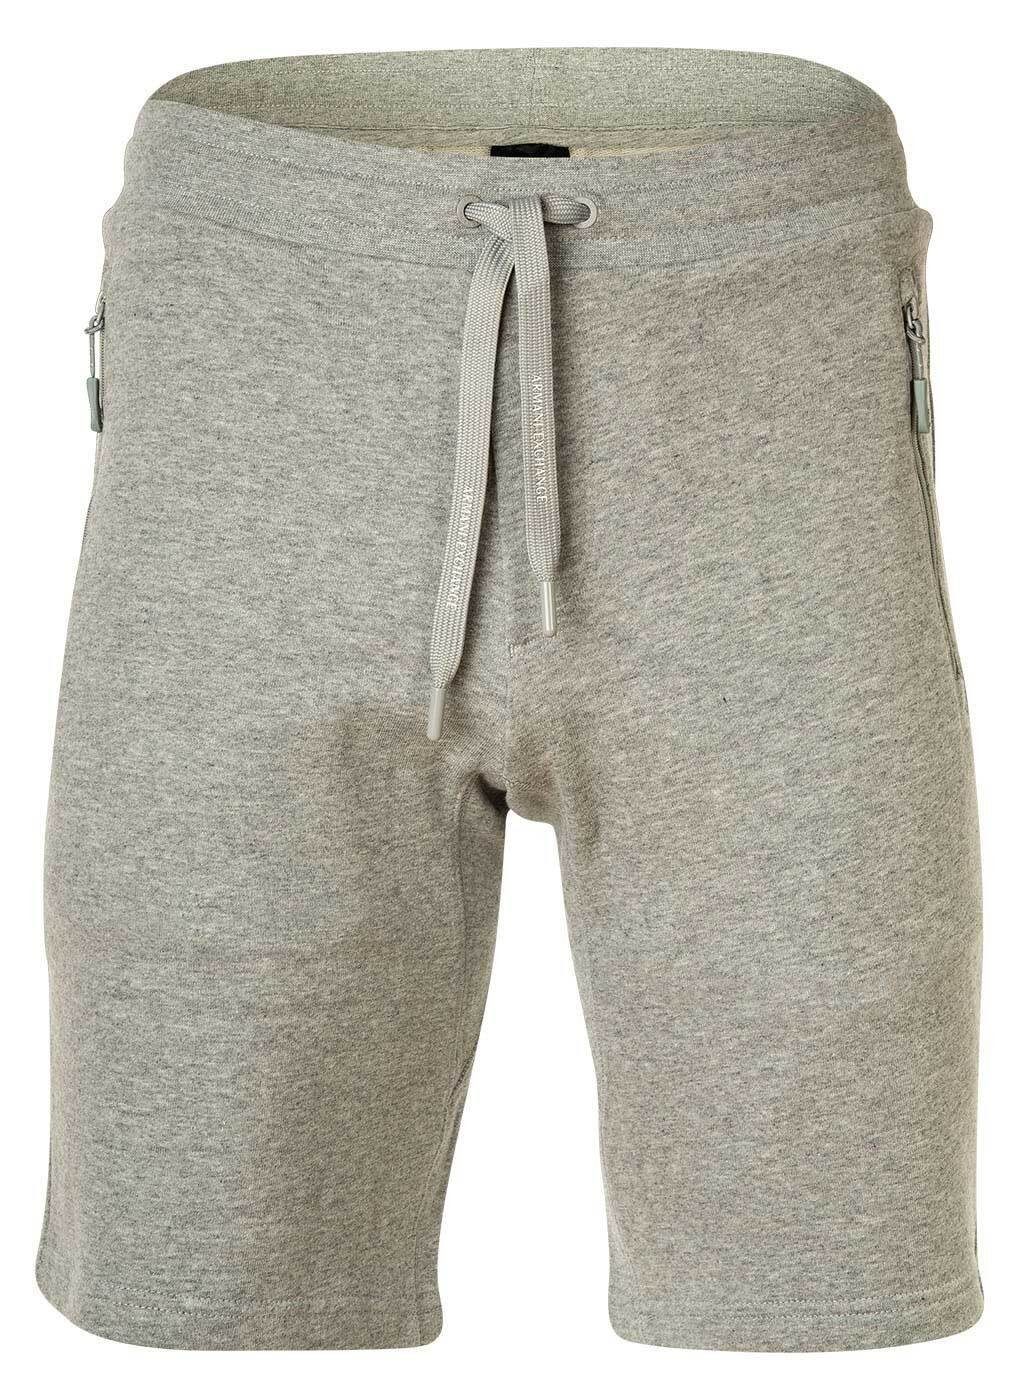 kurz Herren Pants, Loungewear Jogginghose Sweatshorts - ARMANI EXCHANGE Grau